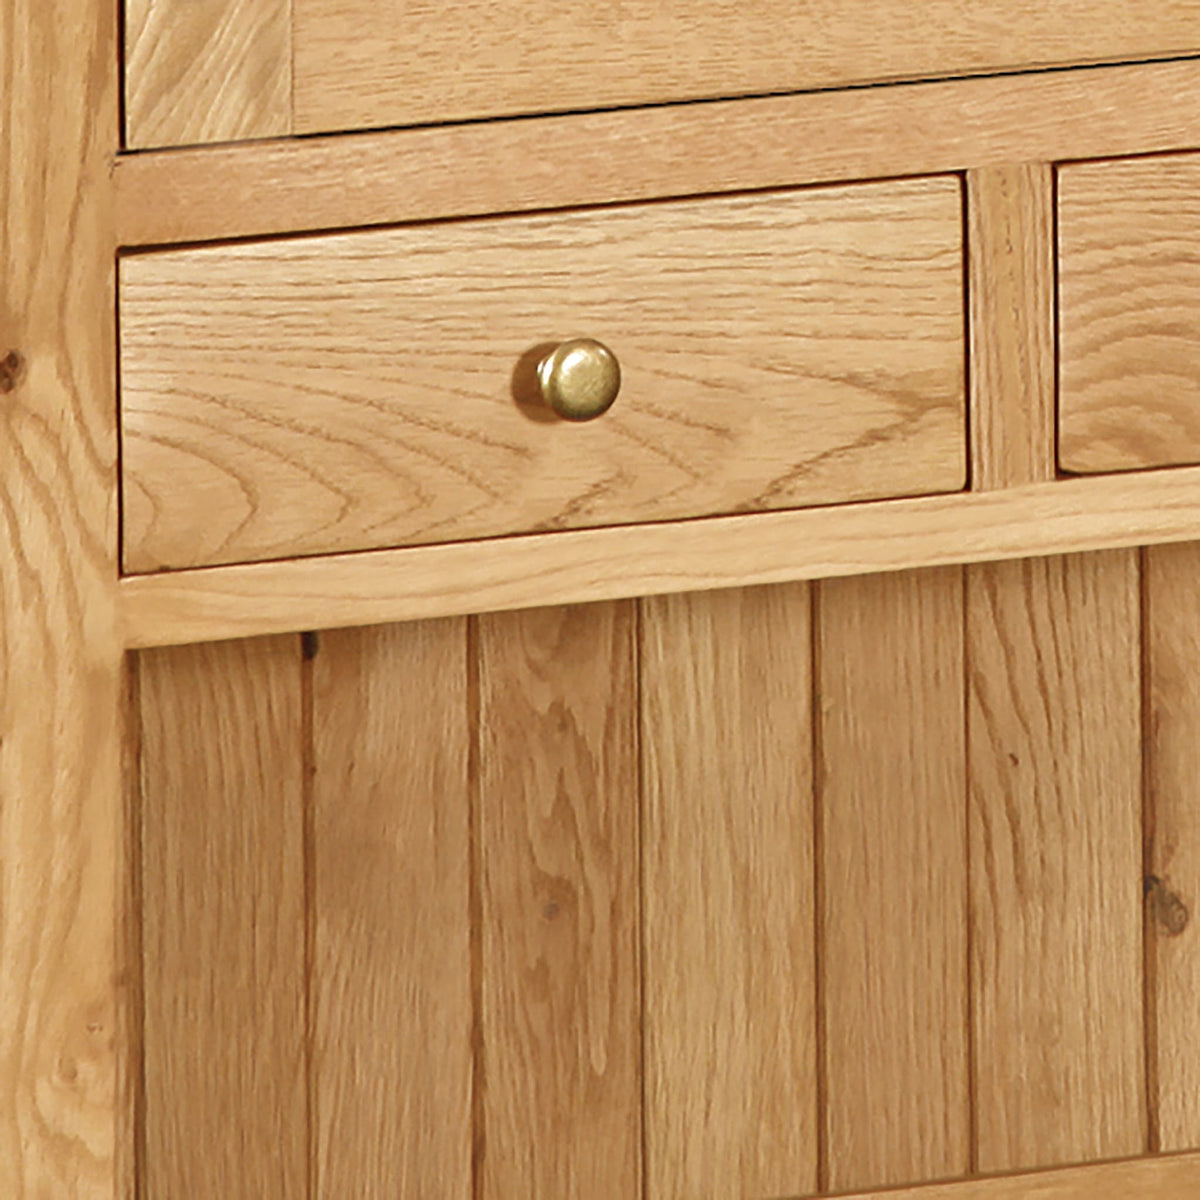 Zelah Extra Large Dresser - Close Up of Drawer Front on Hutch